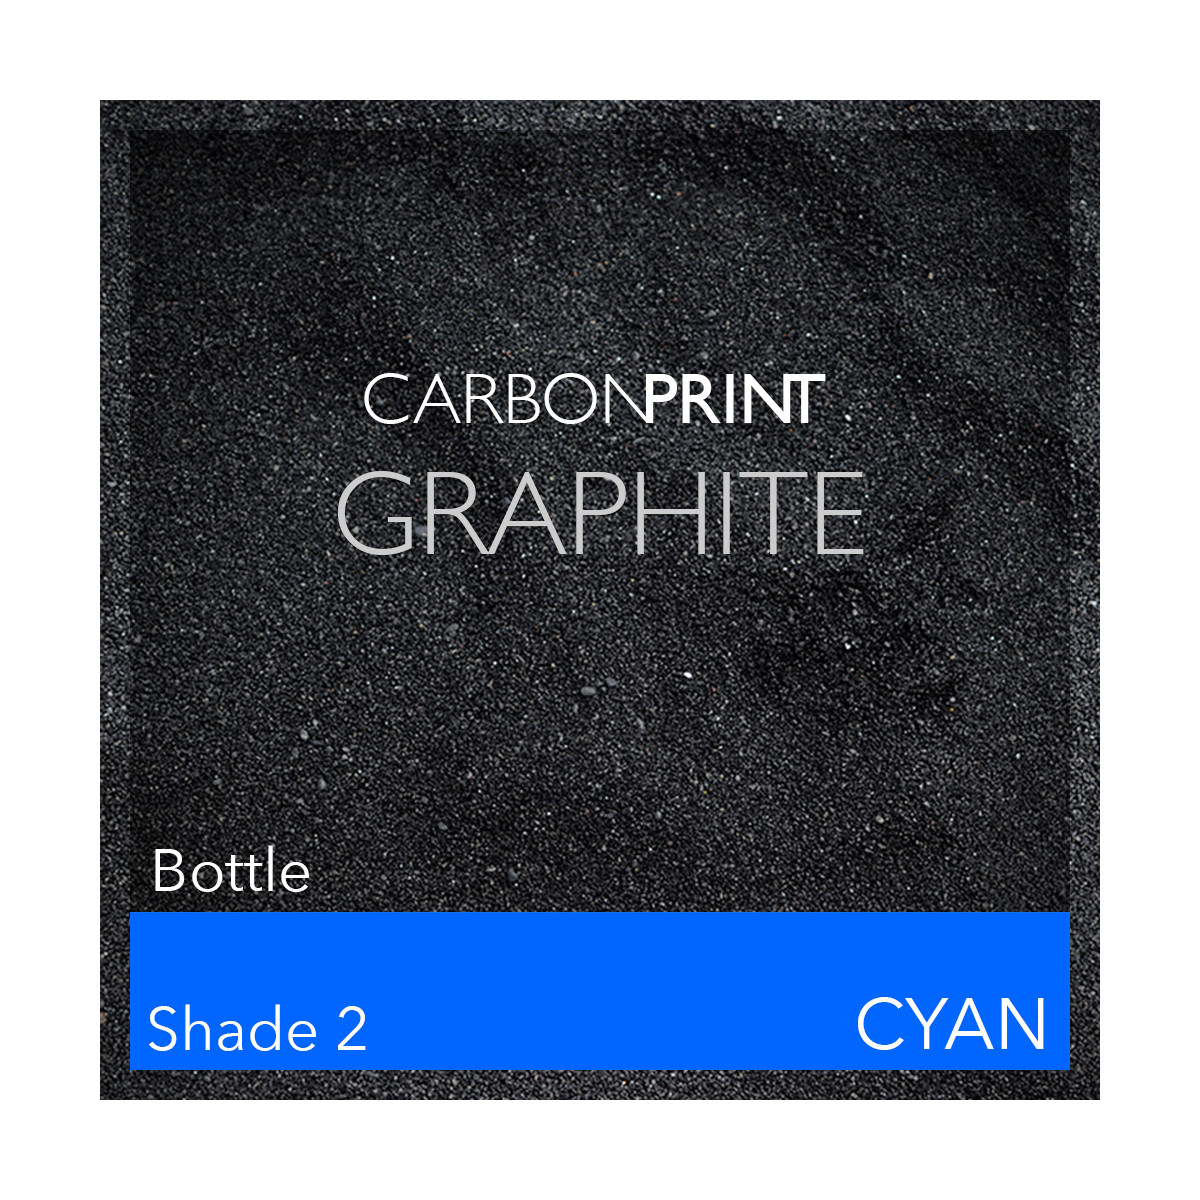 Carbonprint Graphite Shade2 Kanal C